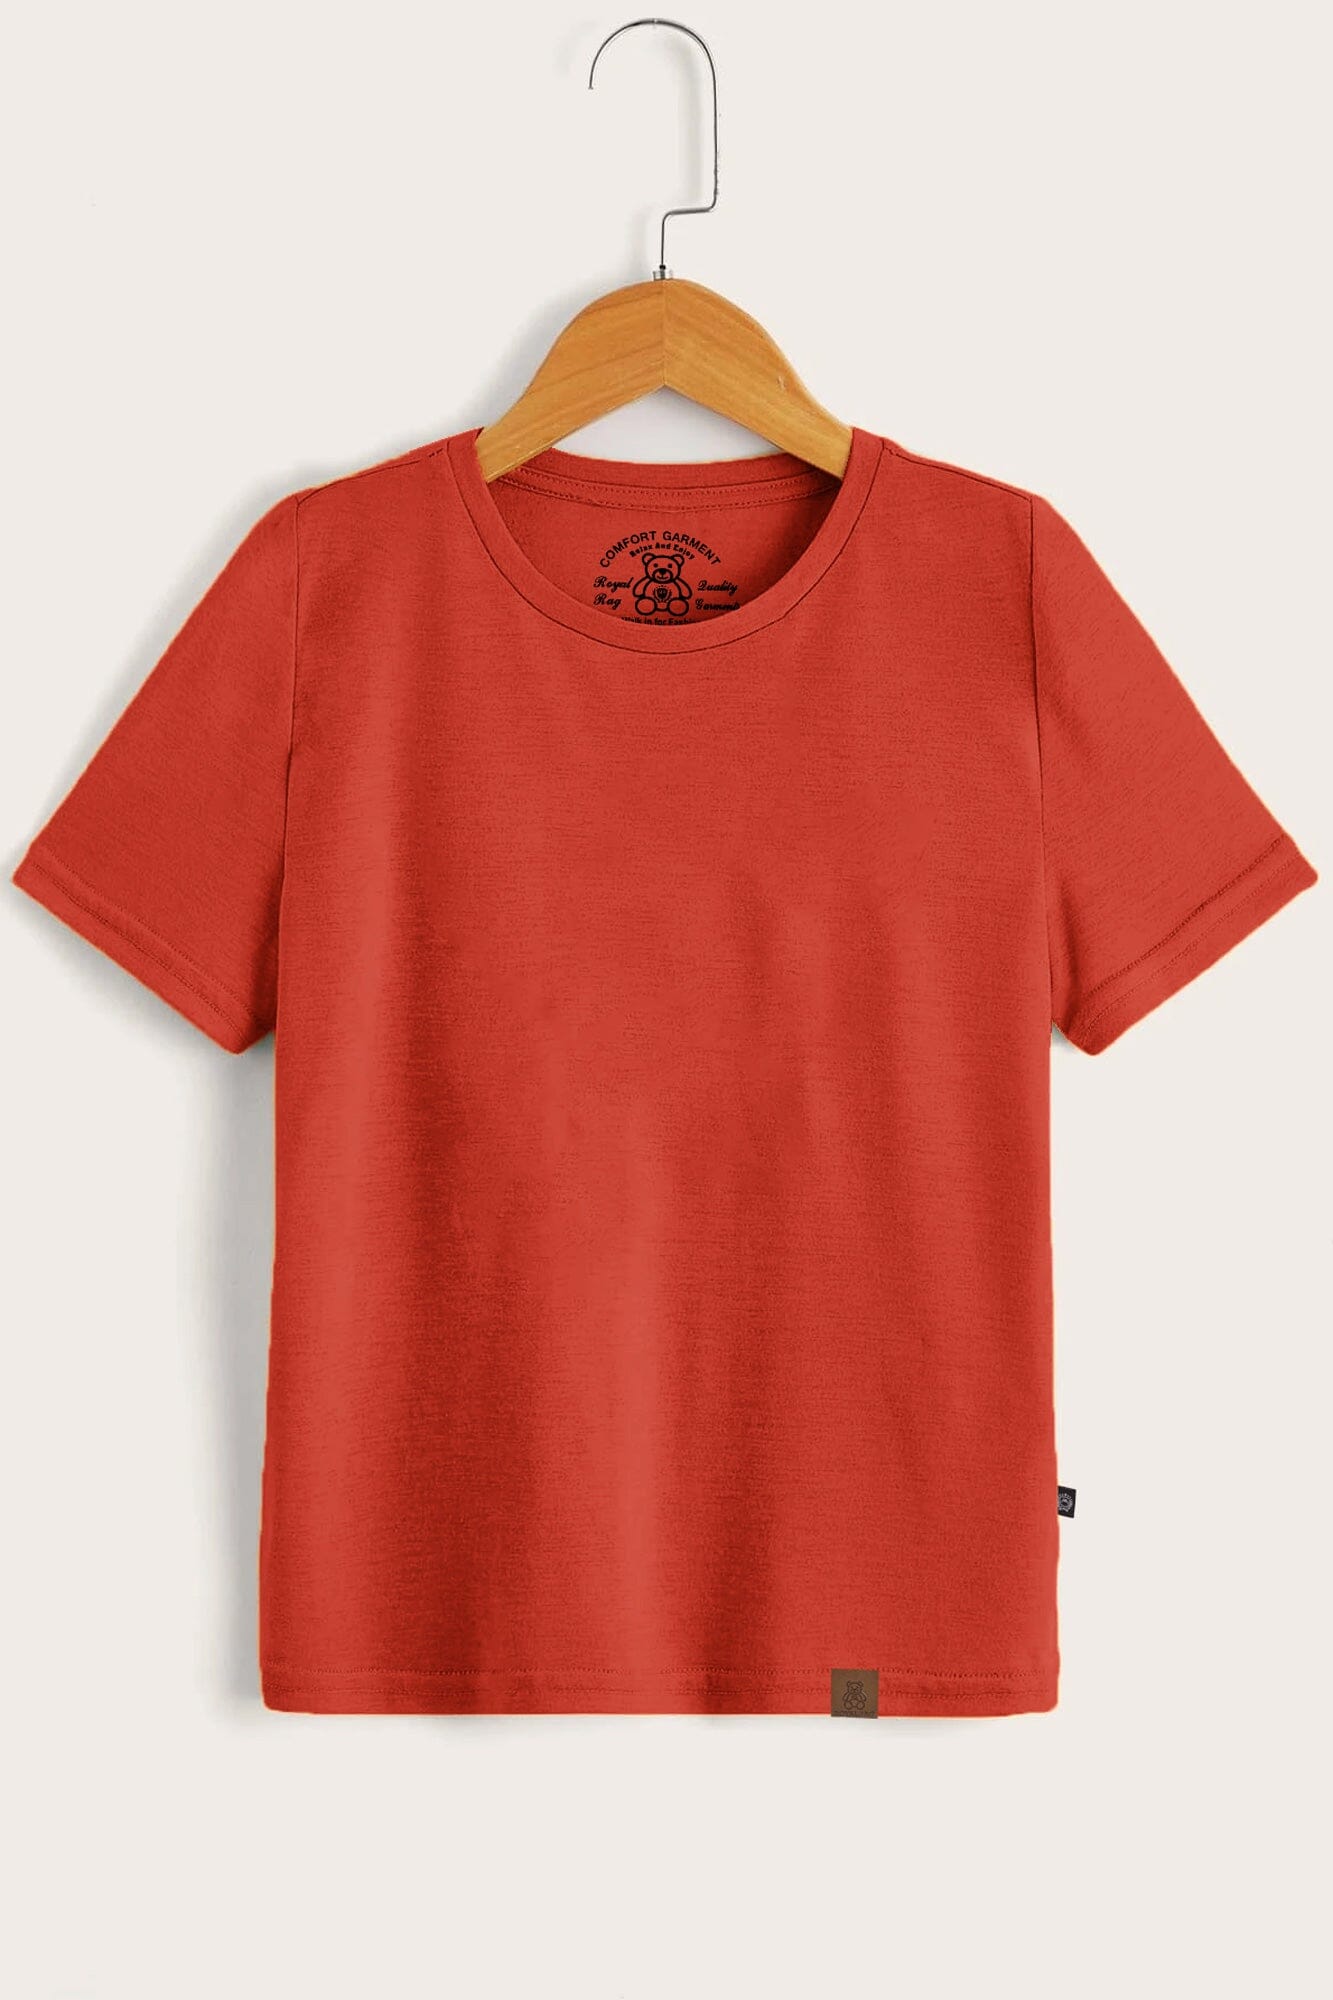 RR Comfort Kid's Solid Design Short Sleeve Tee Shirt Boy's Tee Shirt Usman Traders Coral Red 2-3 Years 